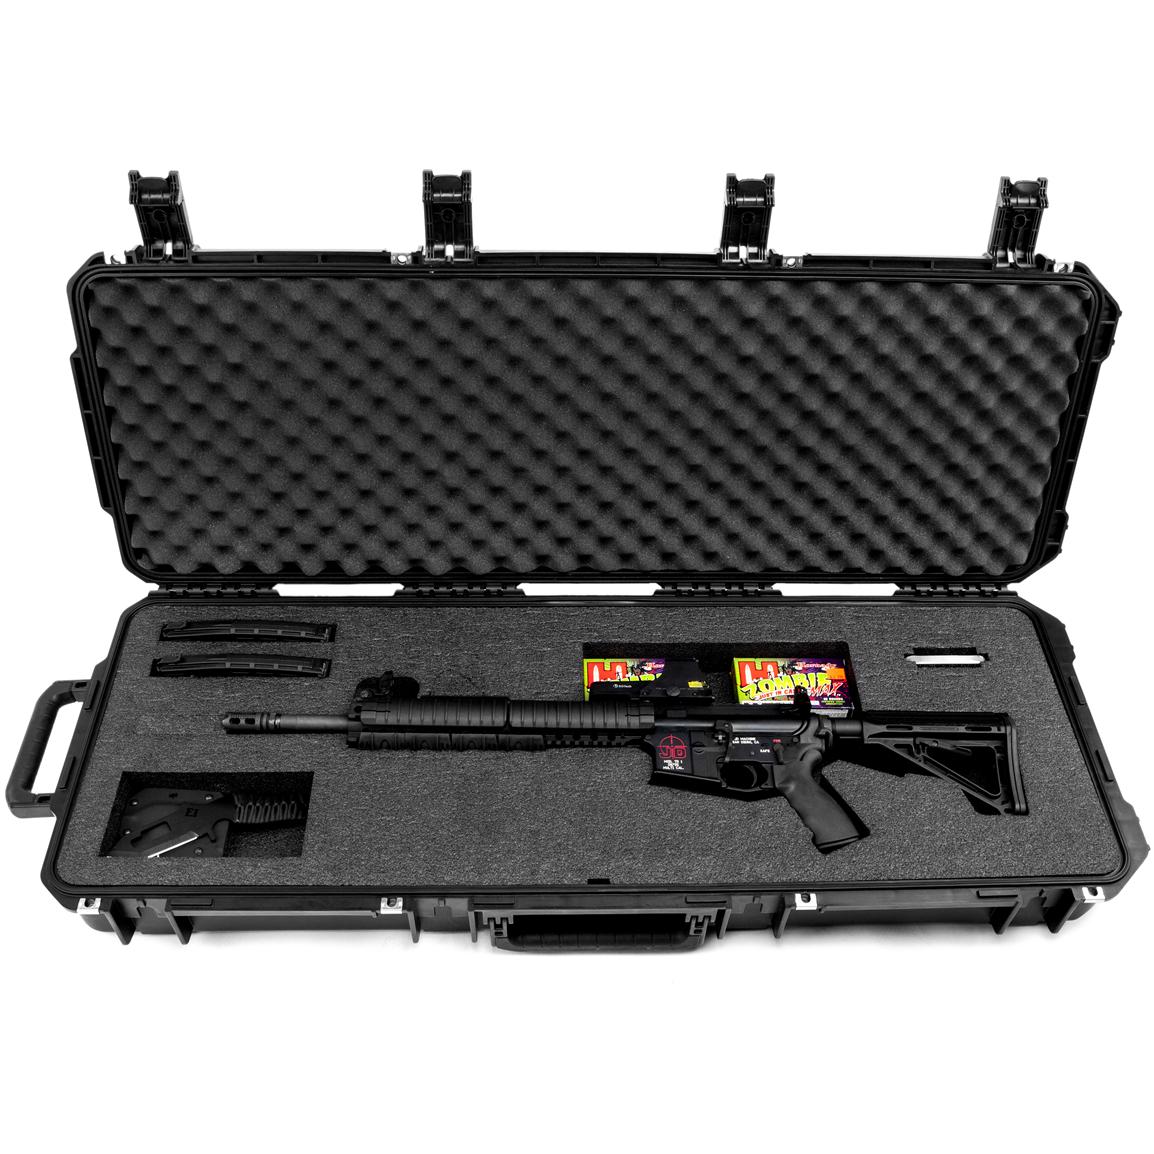 Quick Fire Cases QFAR15 AR15 Case 579041, Gun Cases at Sportsman's Guide